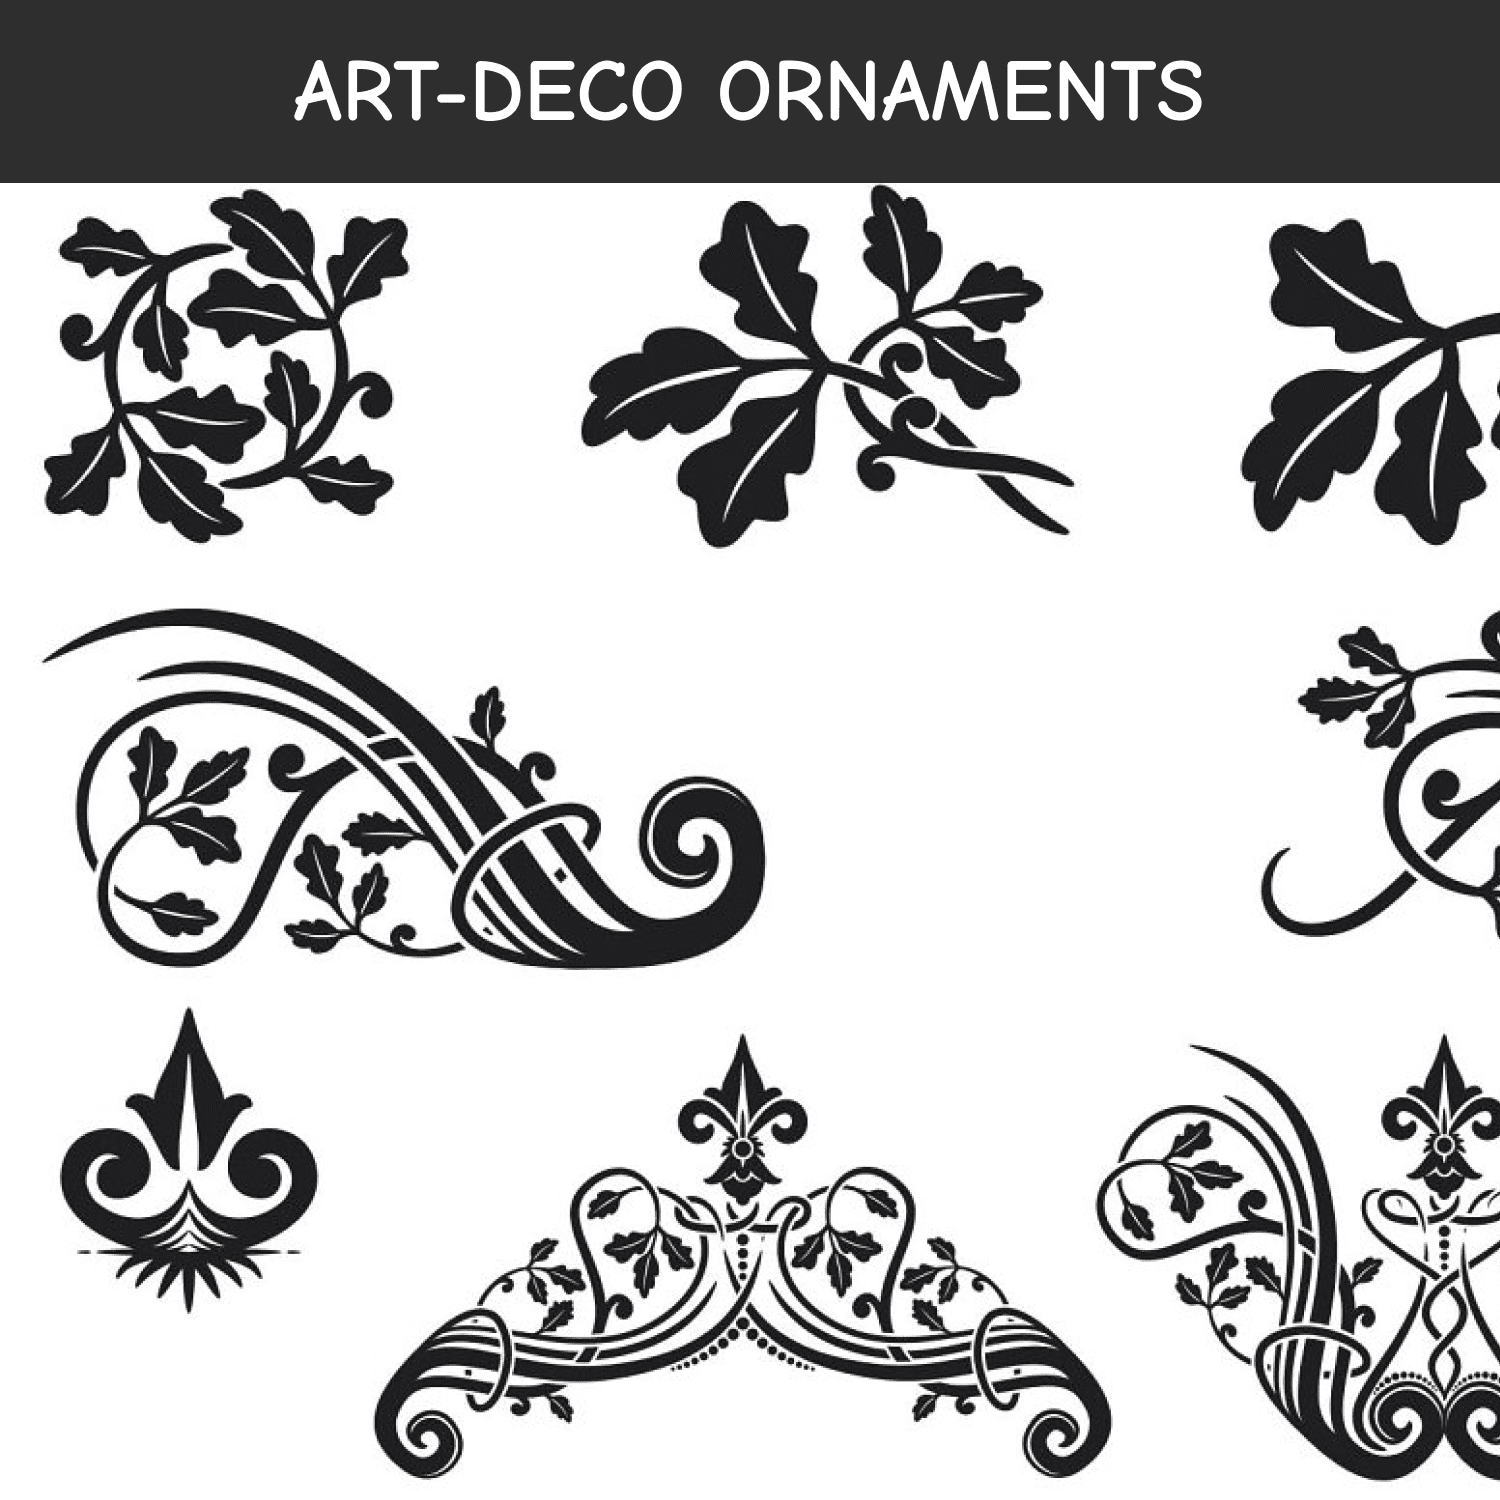 art deco ornaments cover image.